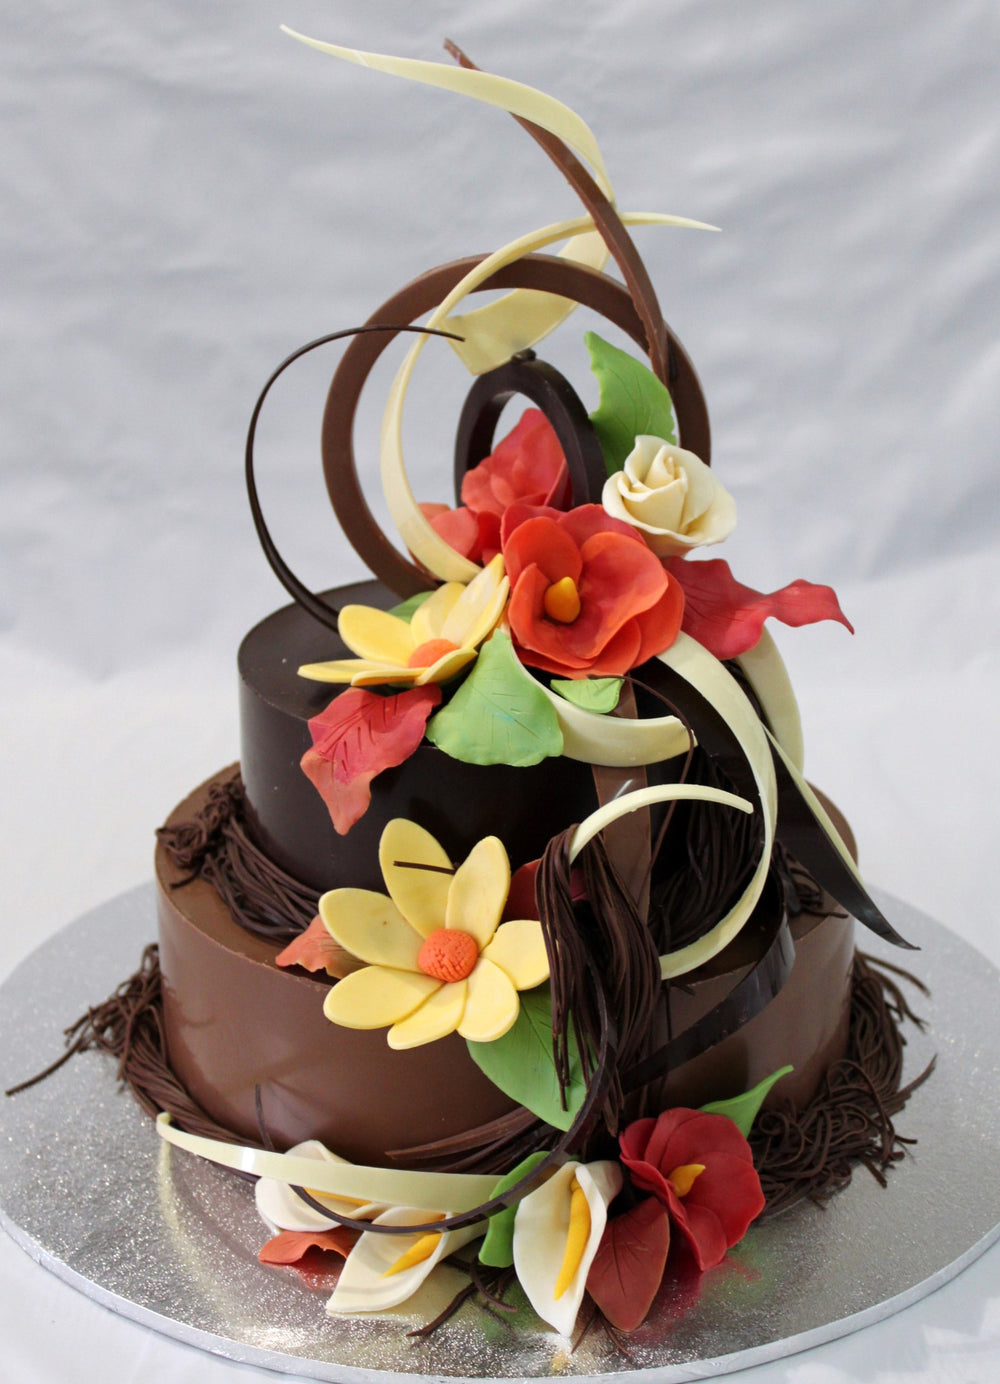 Chocolate Smash Cake - Bright Floral